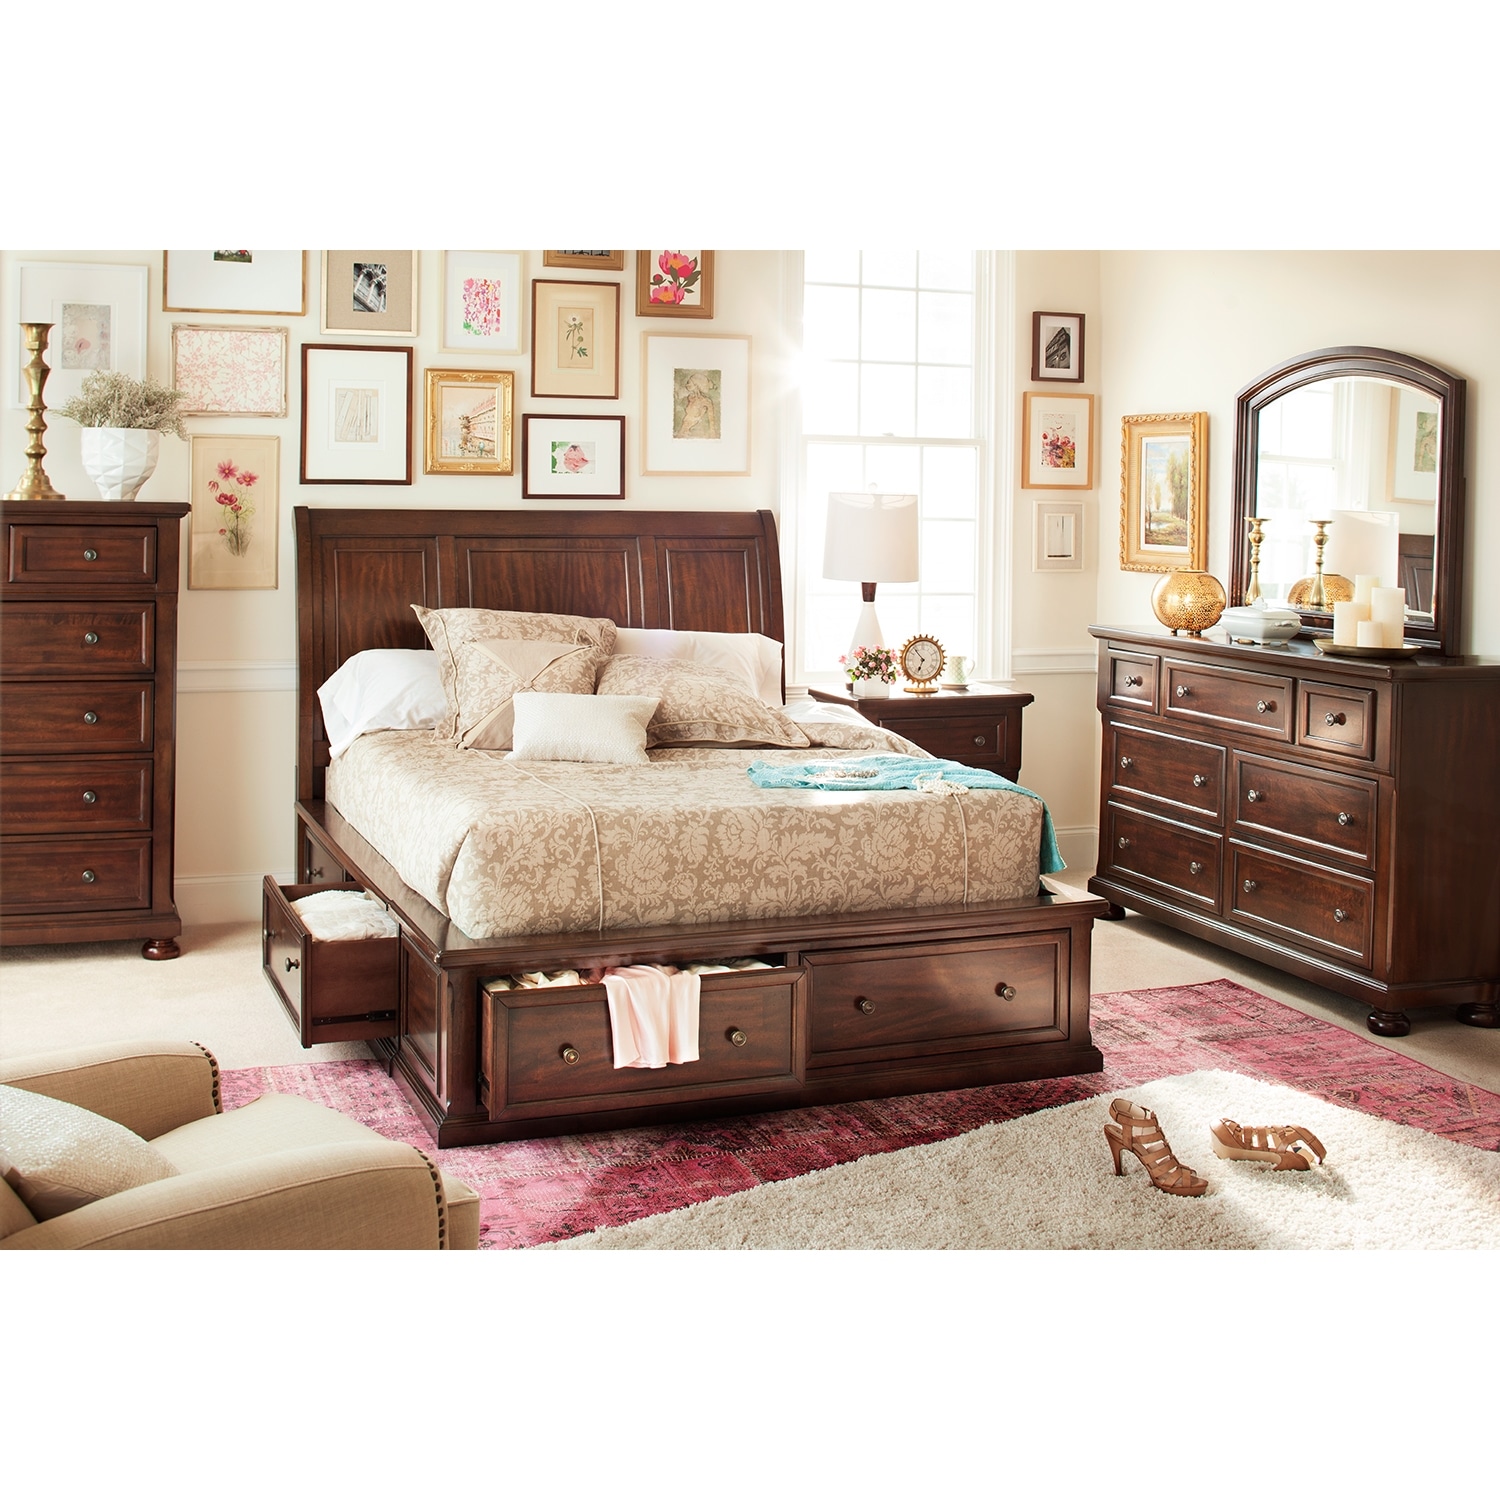 7 piece king bedroom furniture sets photo - 6